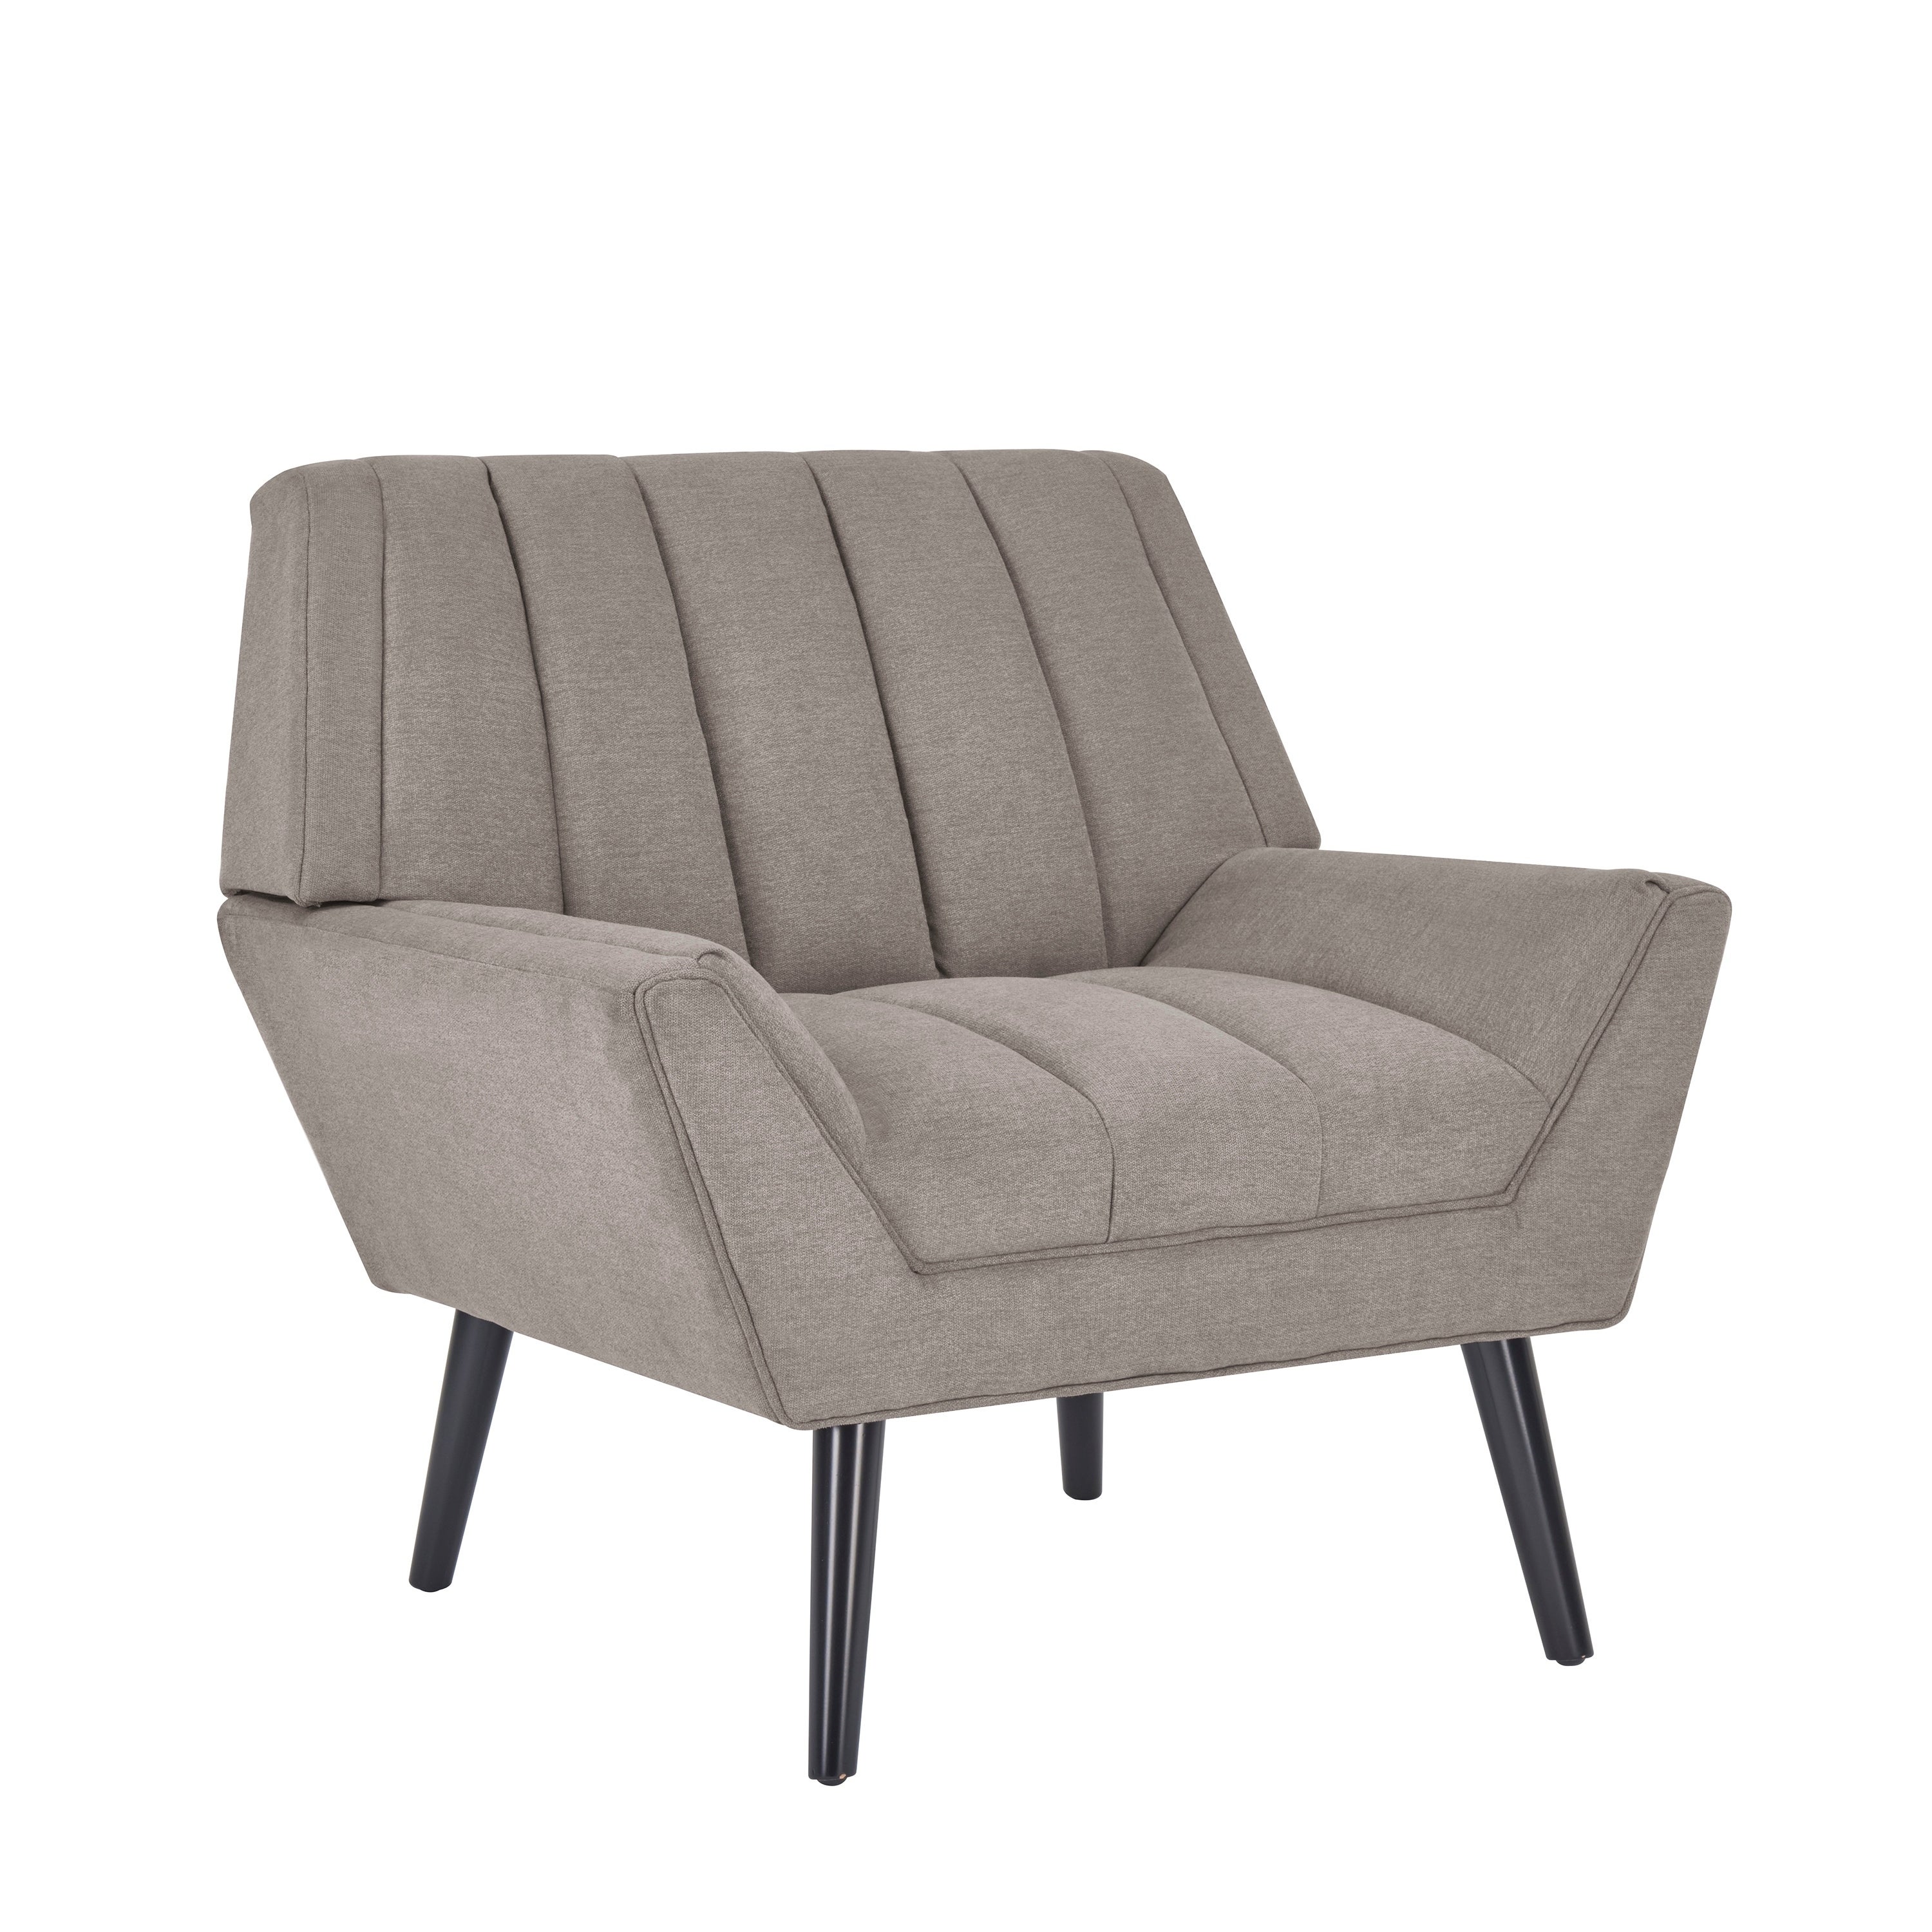 T/T Kingbird Furniture Company Brand Green Sectional Sofa Factory 8